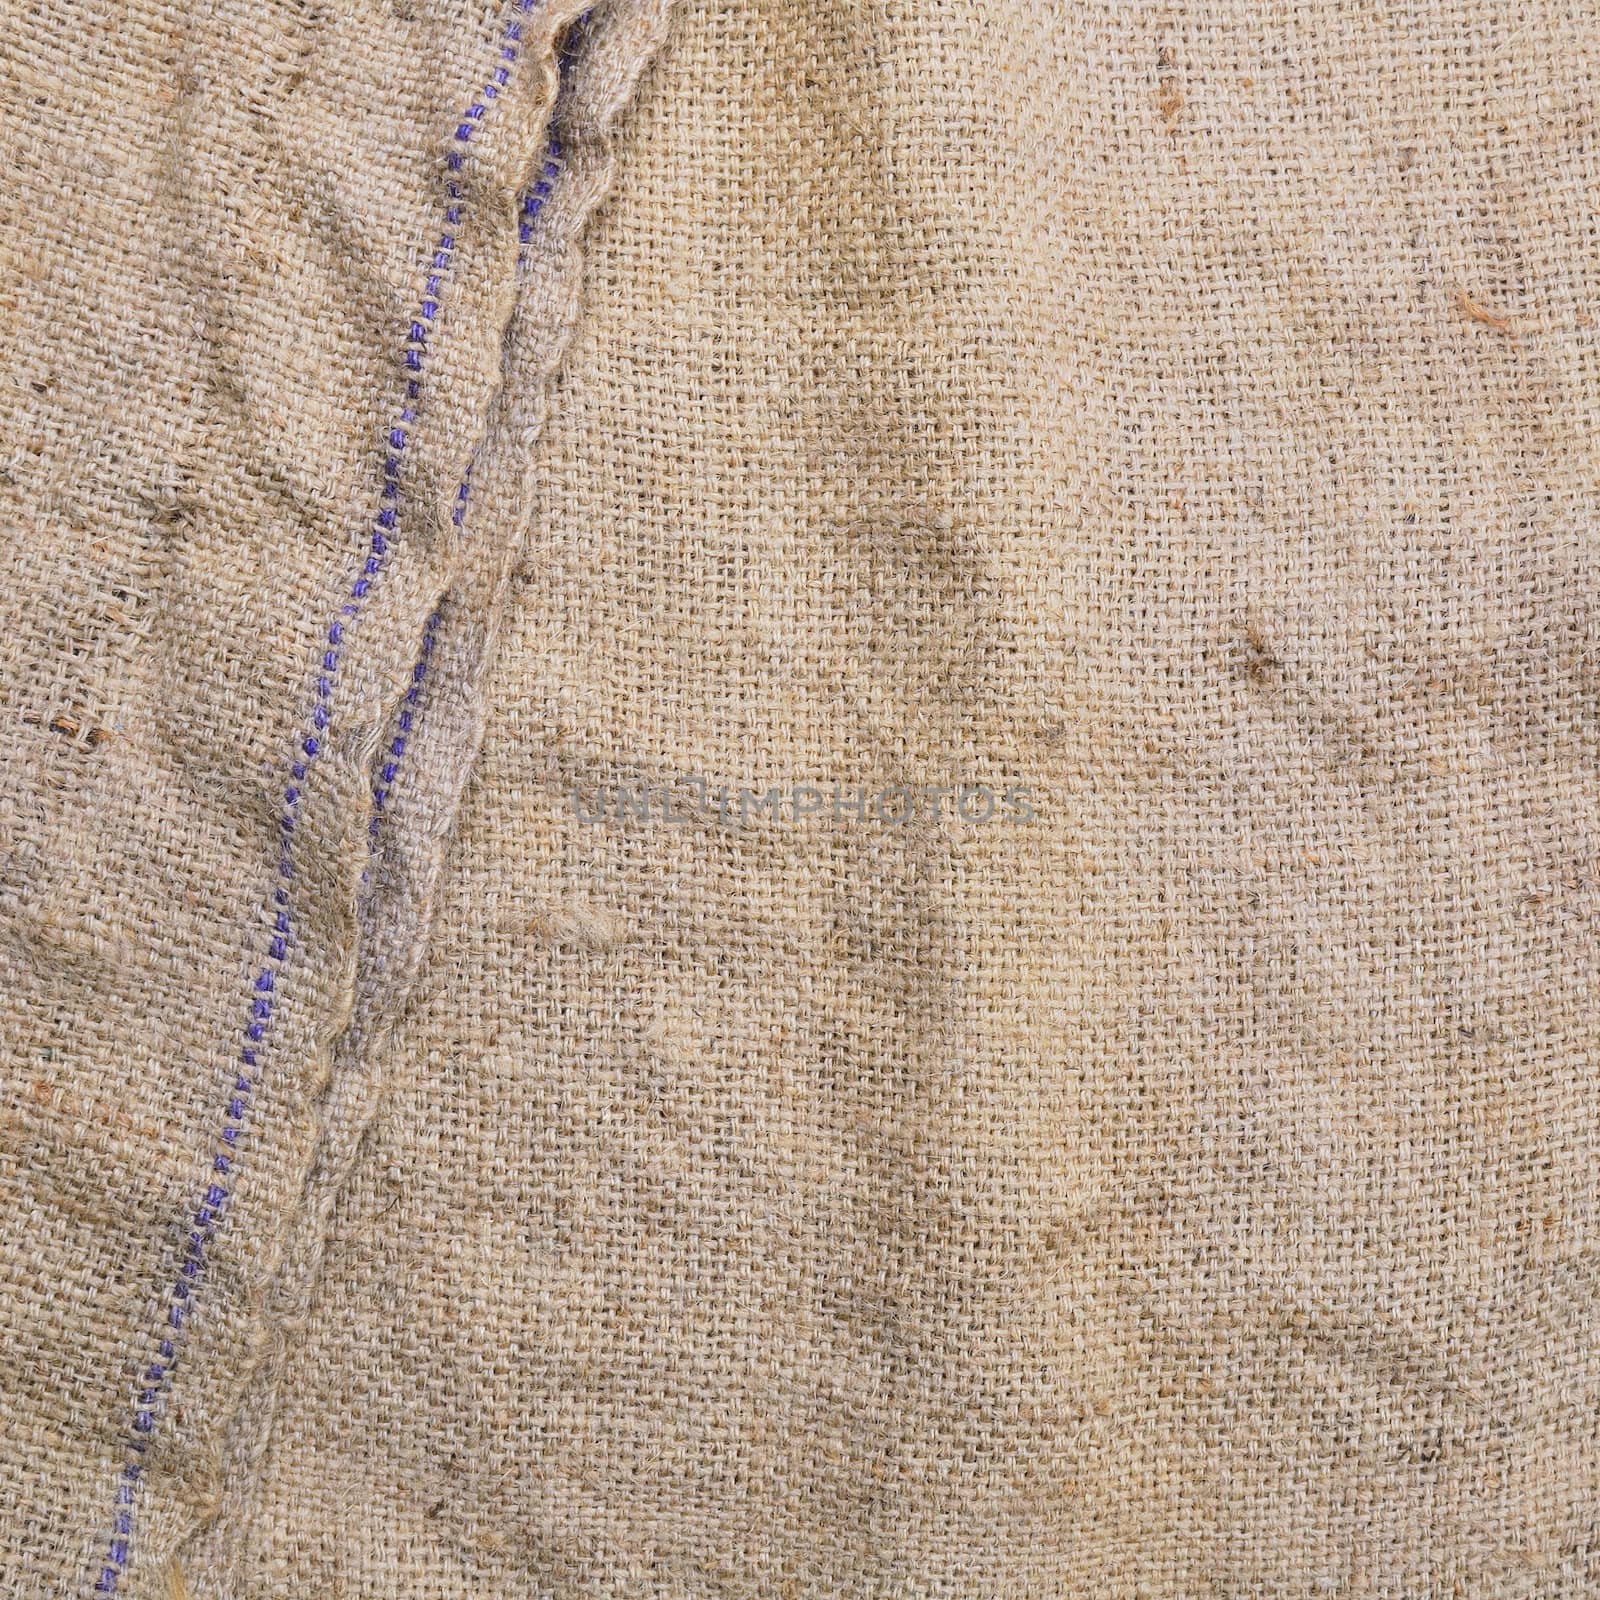 Gunny sack texture background